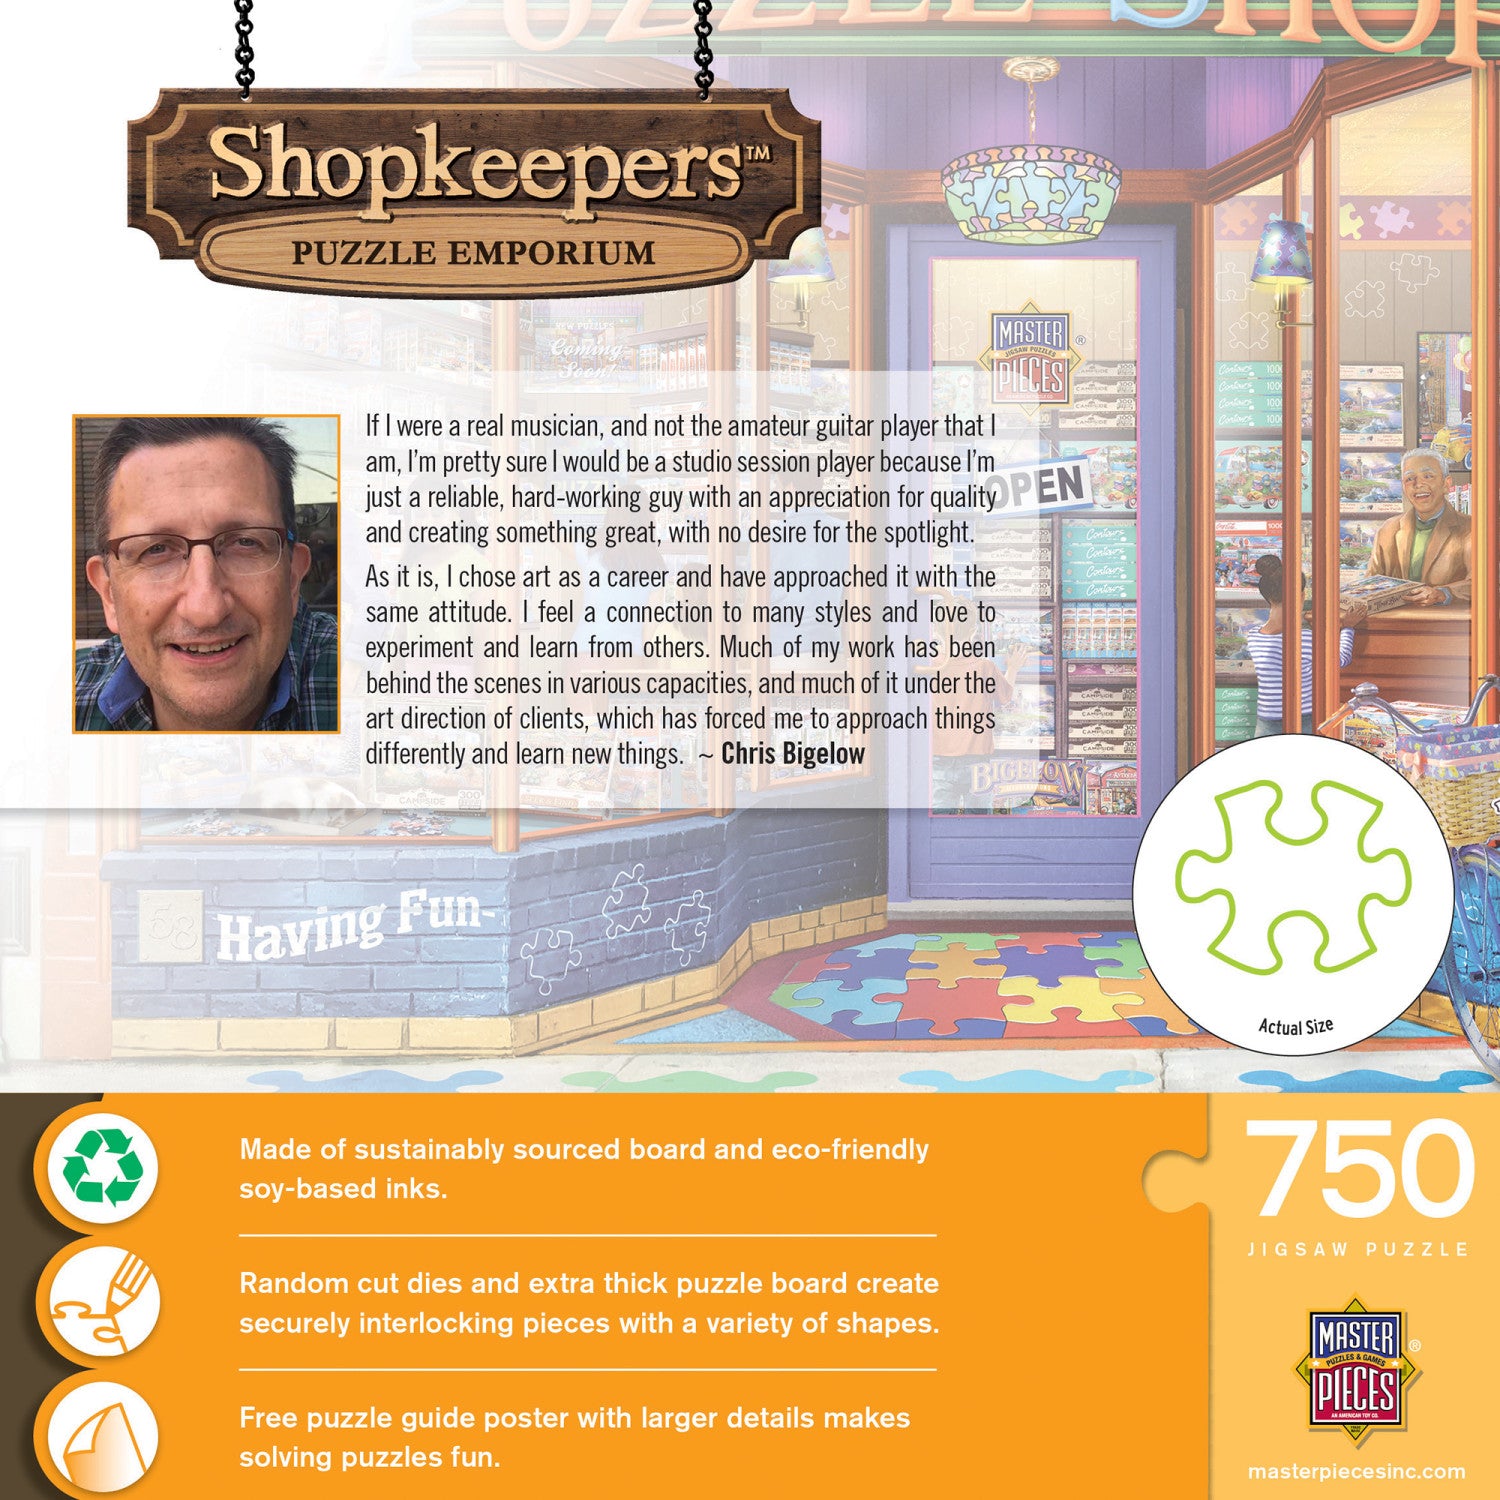 Shopkeepers - Puzzle Emporium 750 Piece Jigsaw Puzzle